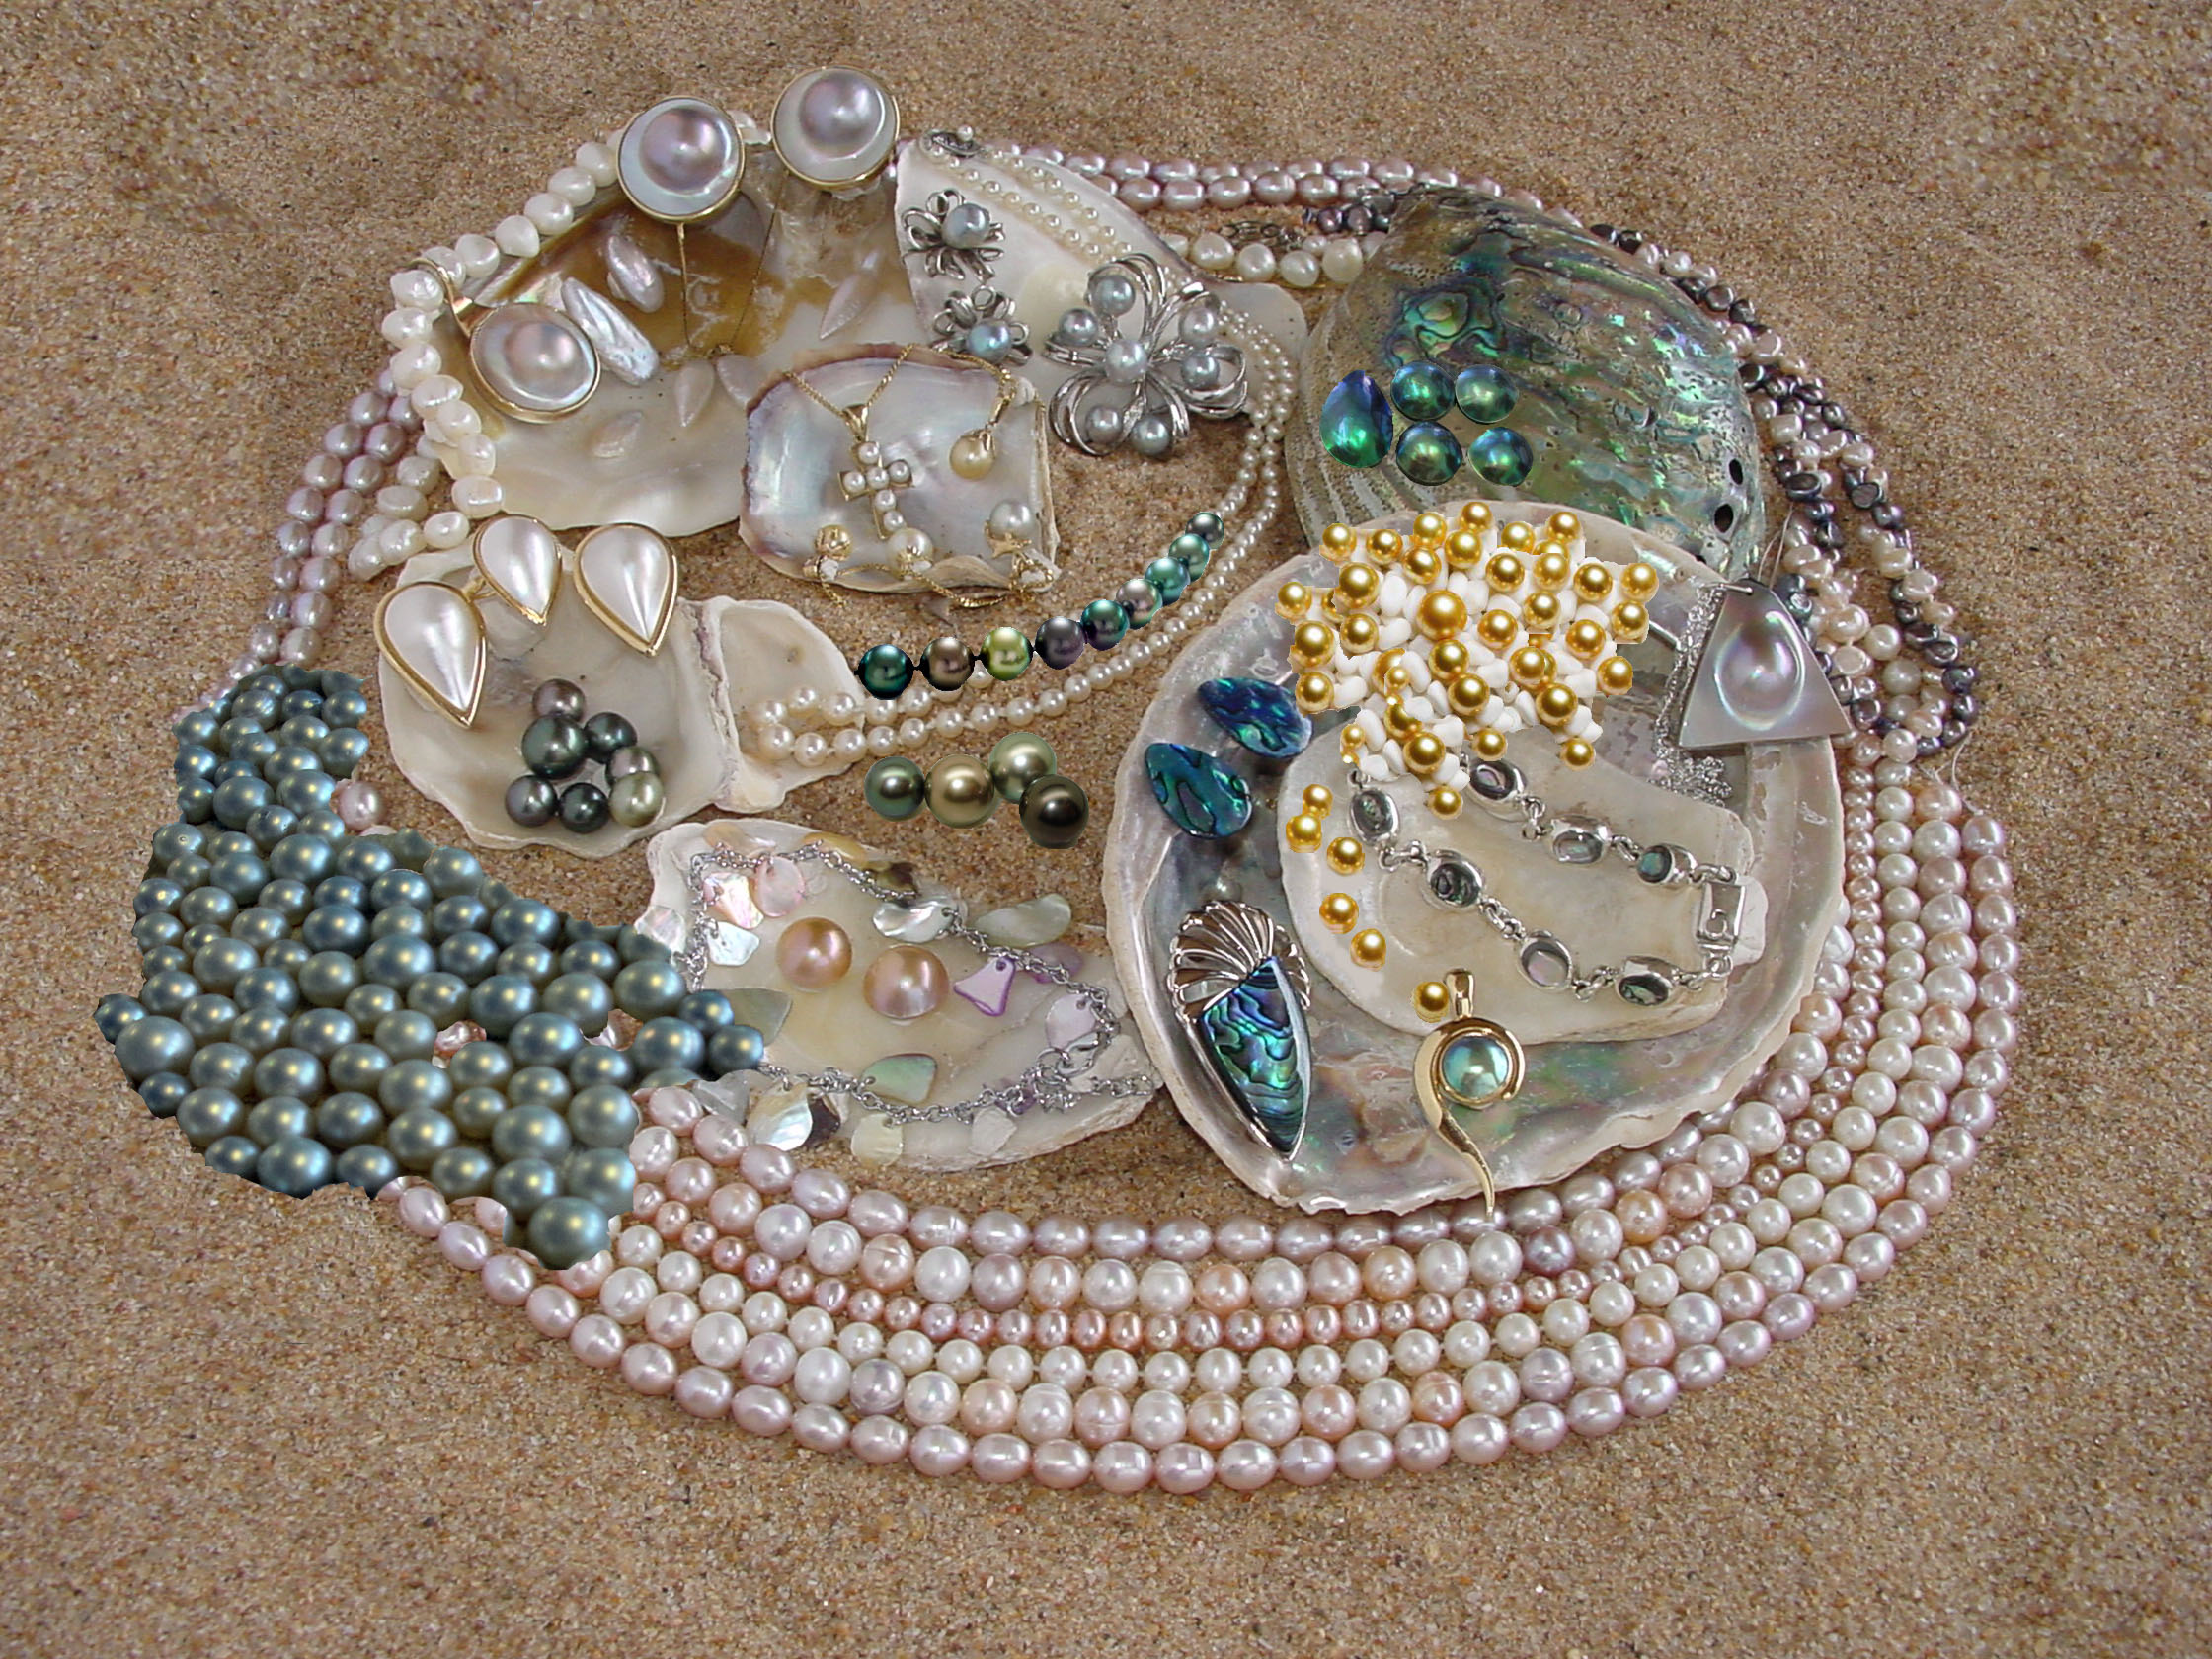 Vaious pearls on display